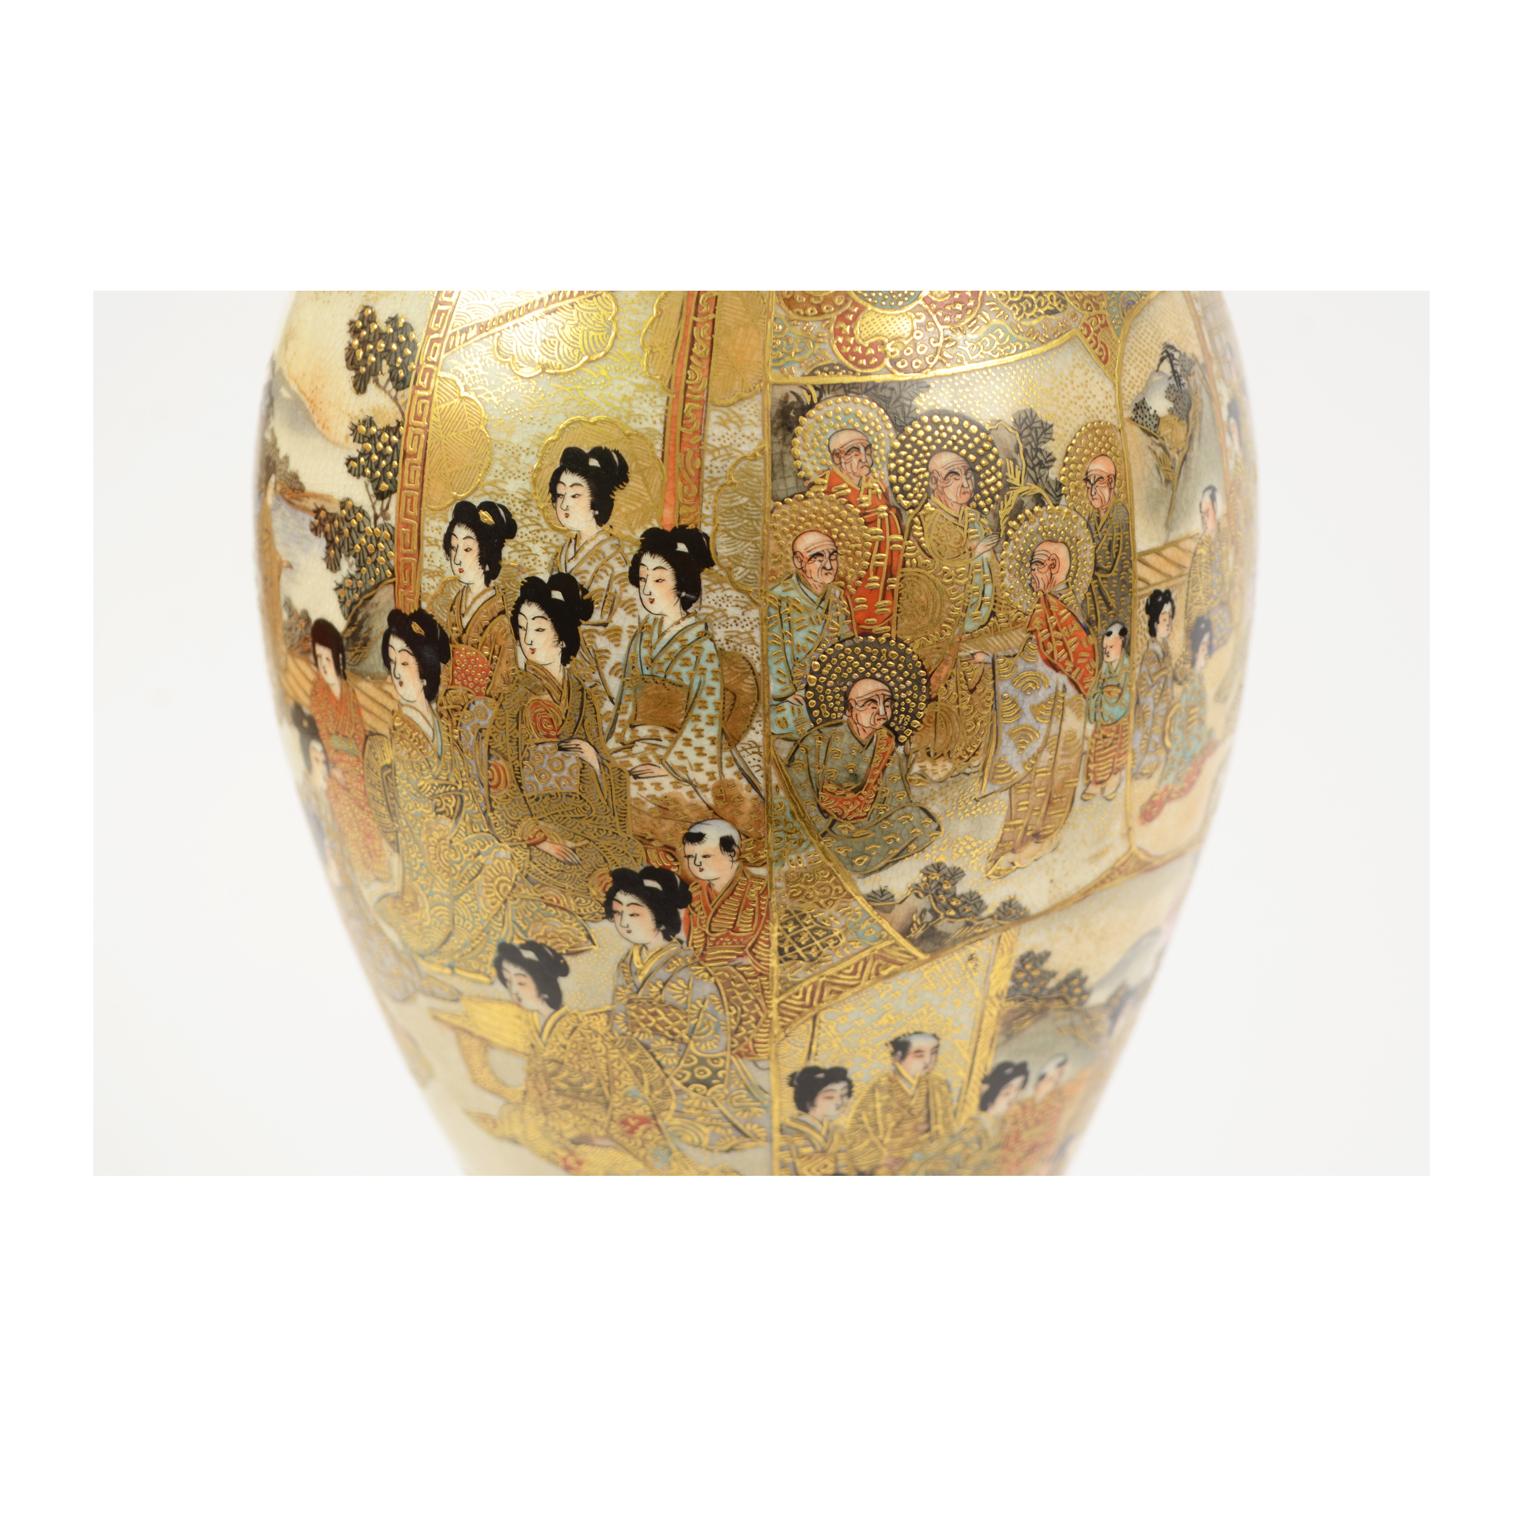 Pair of Japanese Ceramic Satsuma Vases with geishas and monks, 1875 circa 9